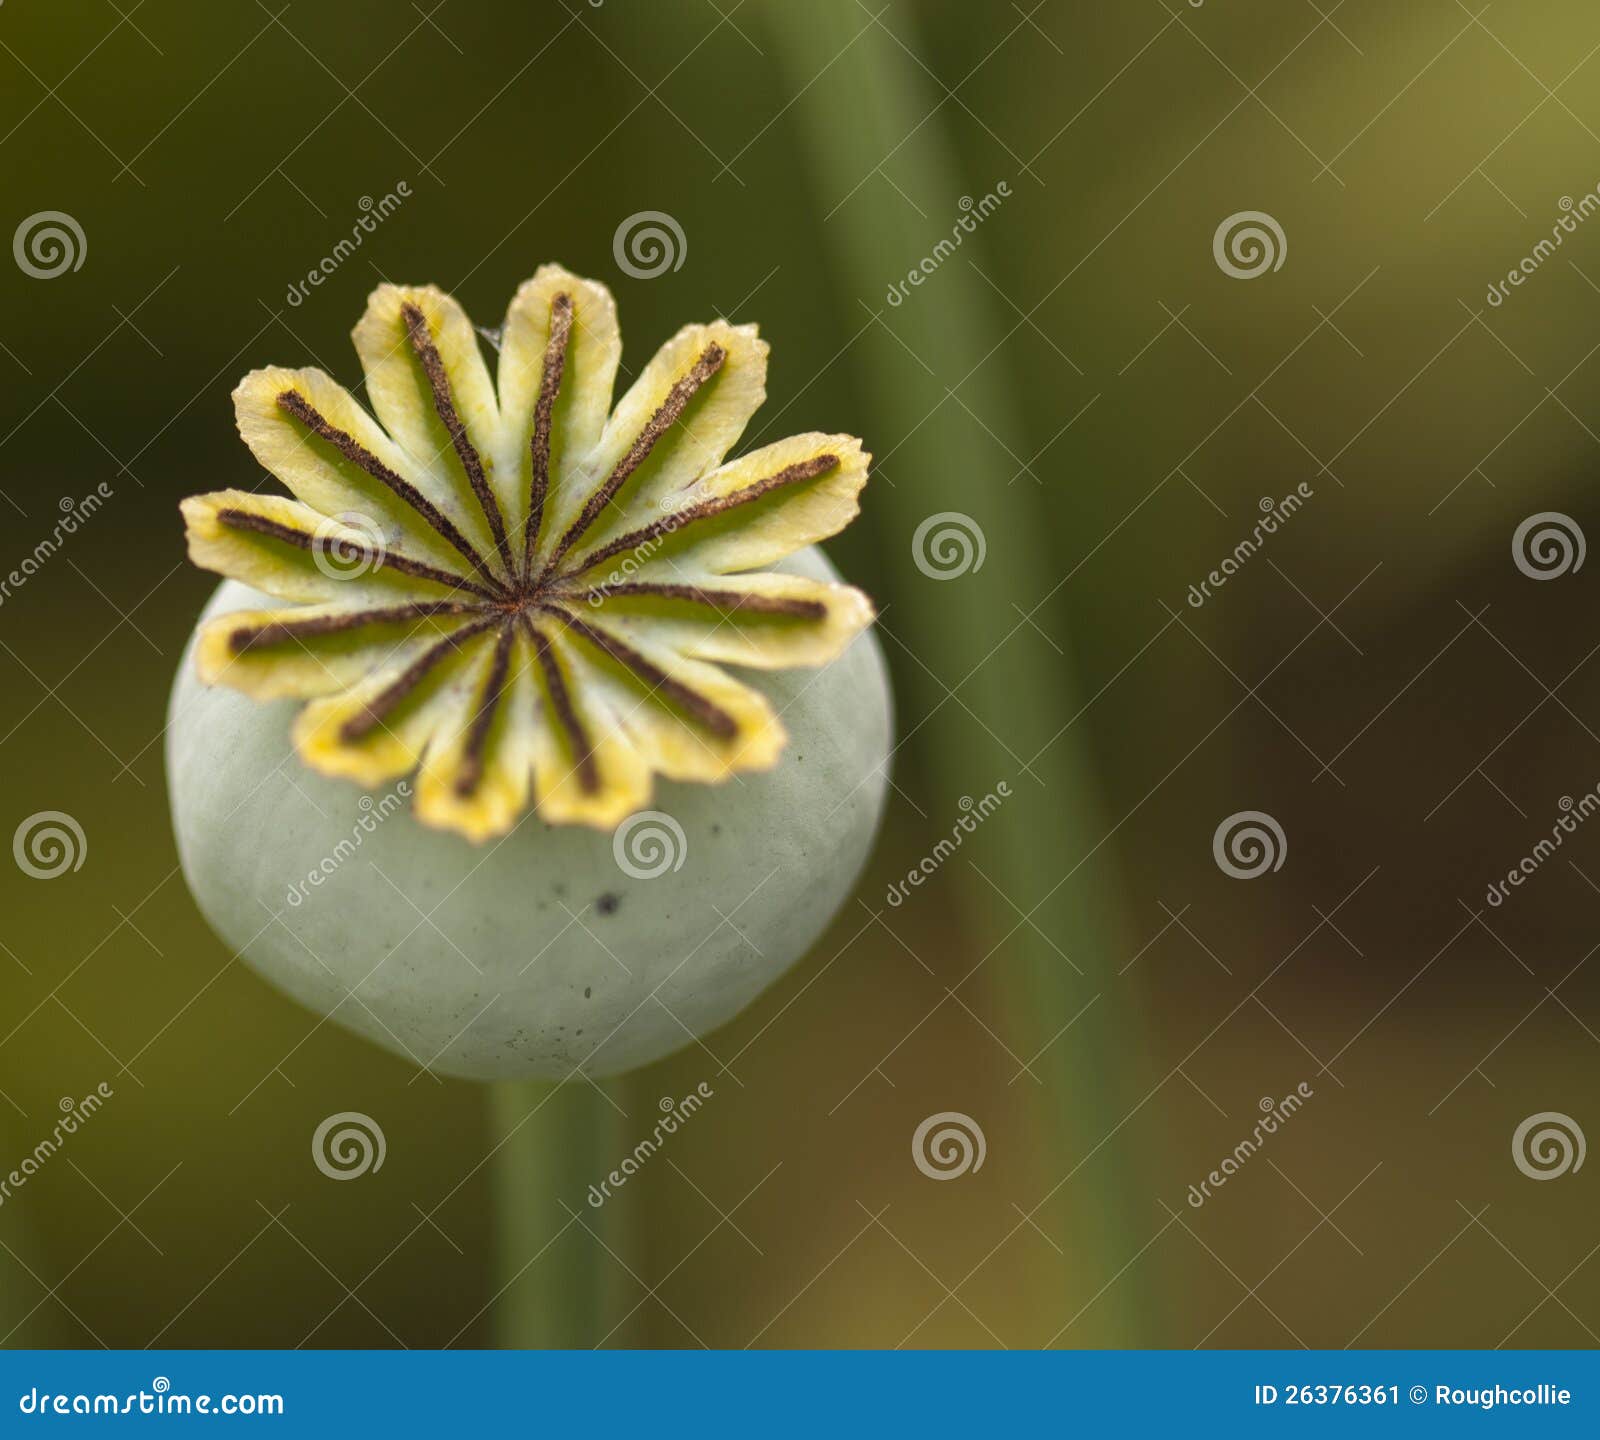 Close-up macro image of a poppy seed head, papaver rhoeas.